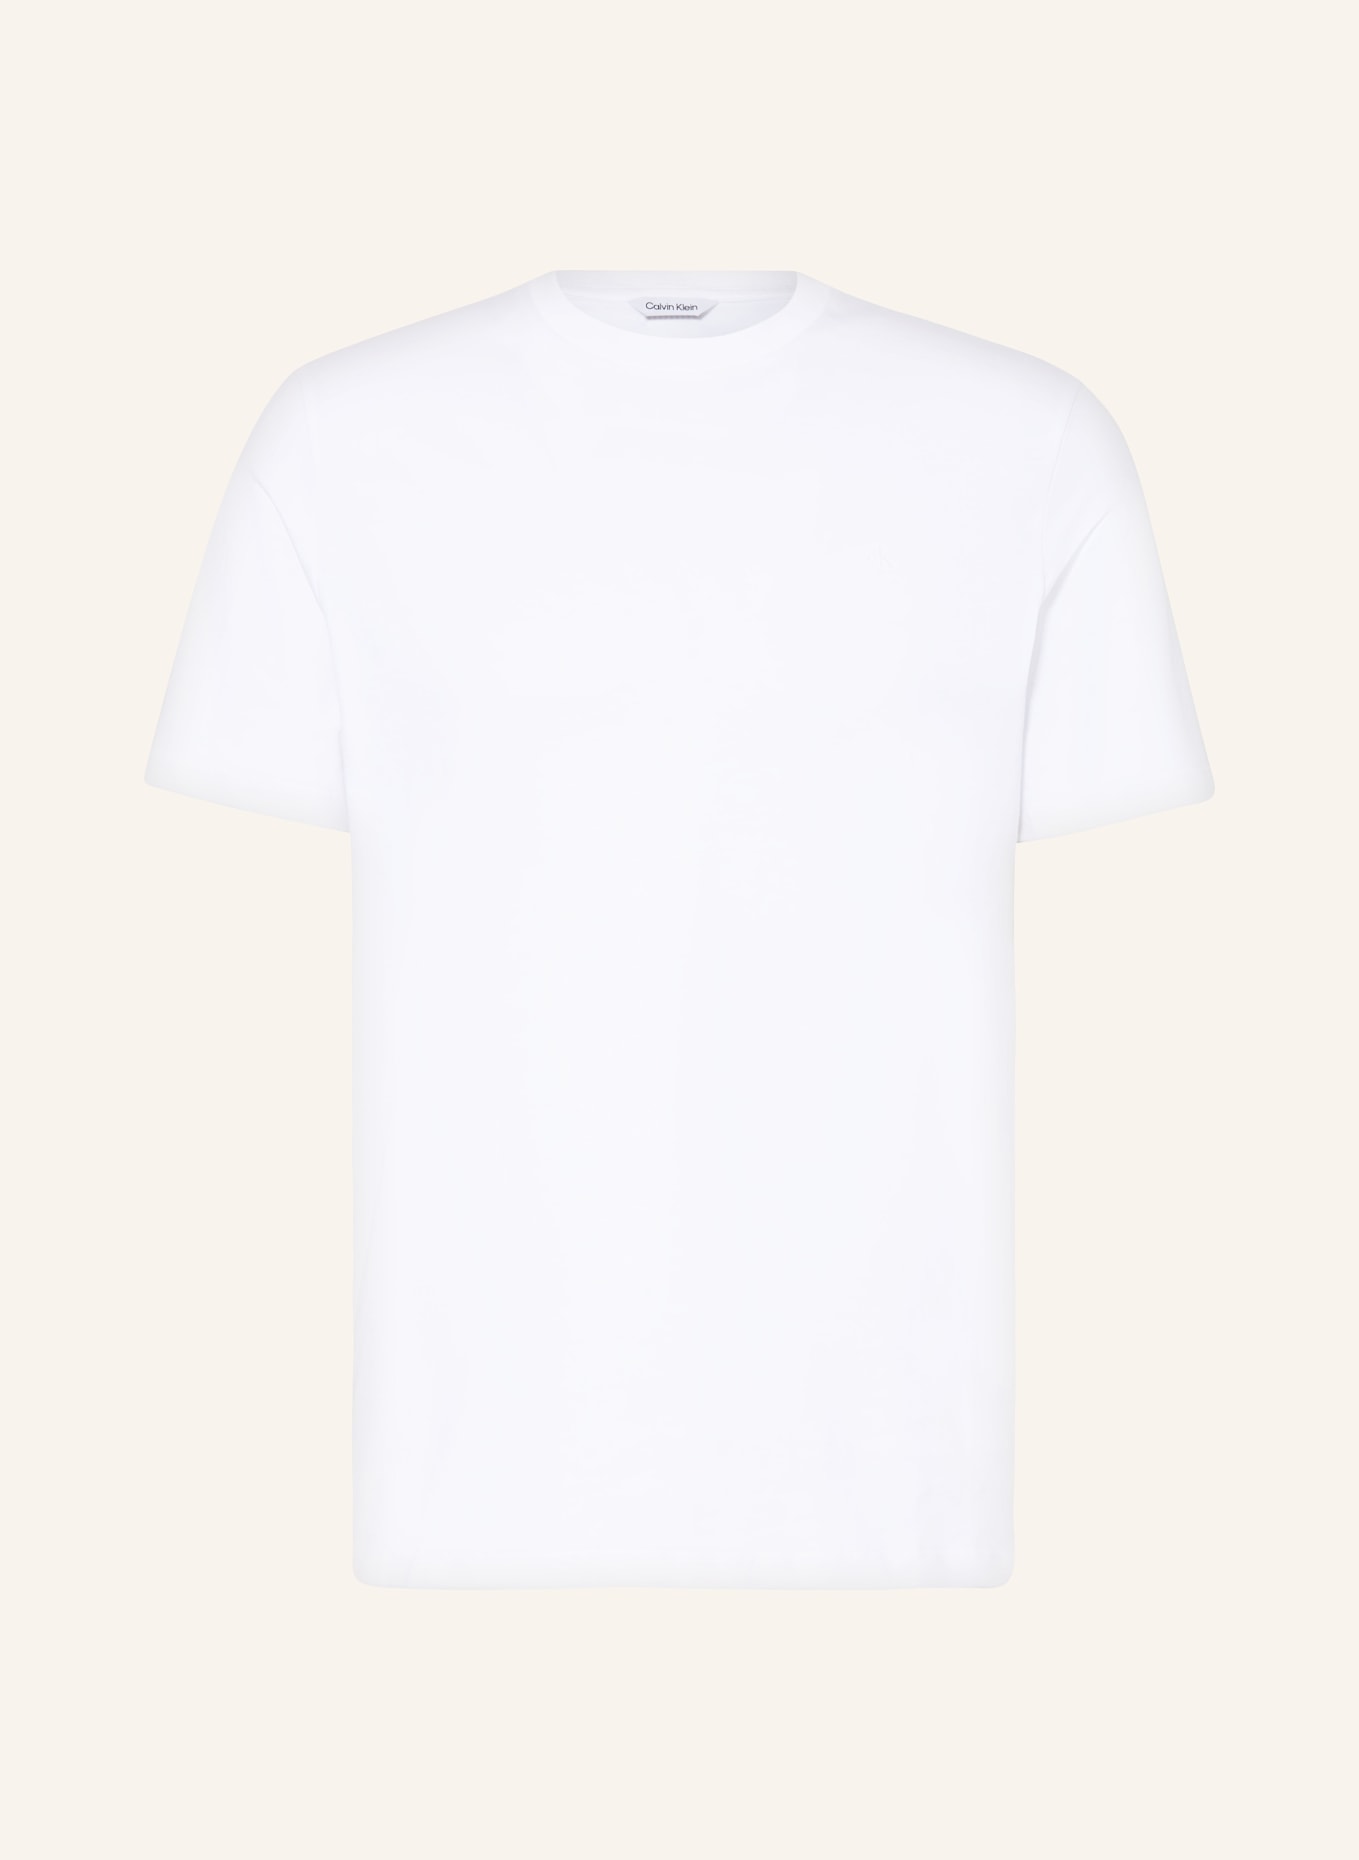 Calvin Klein T-shirt, Color: WHITE (Image 1)